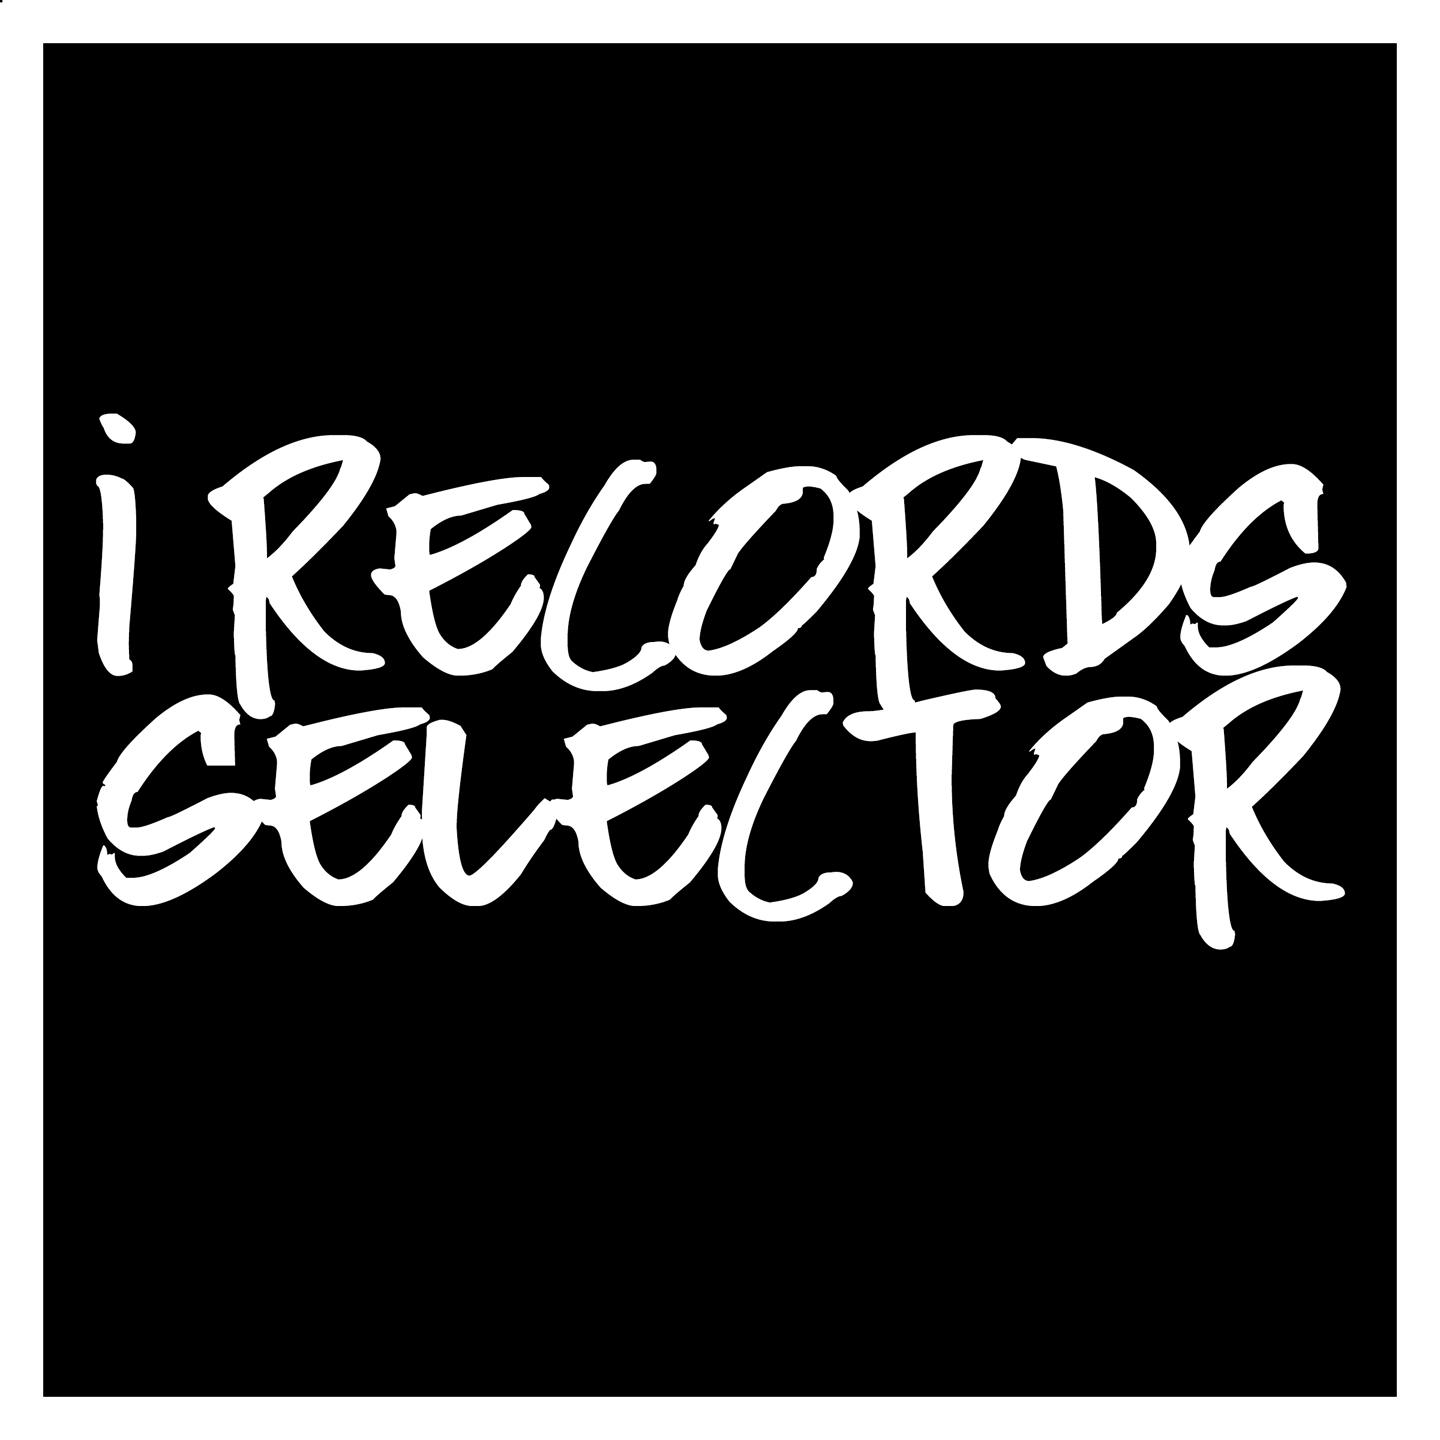 I Records Selector